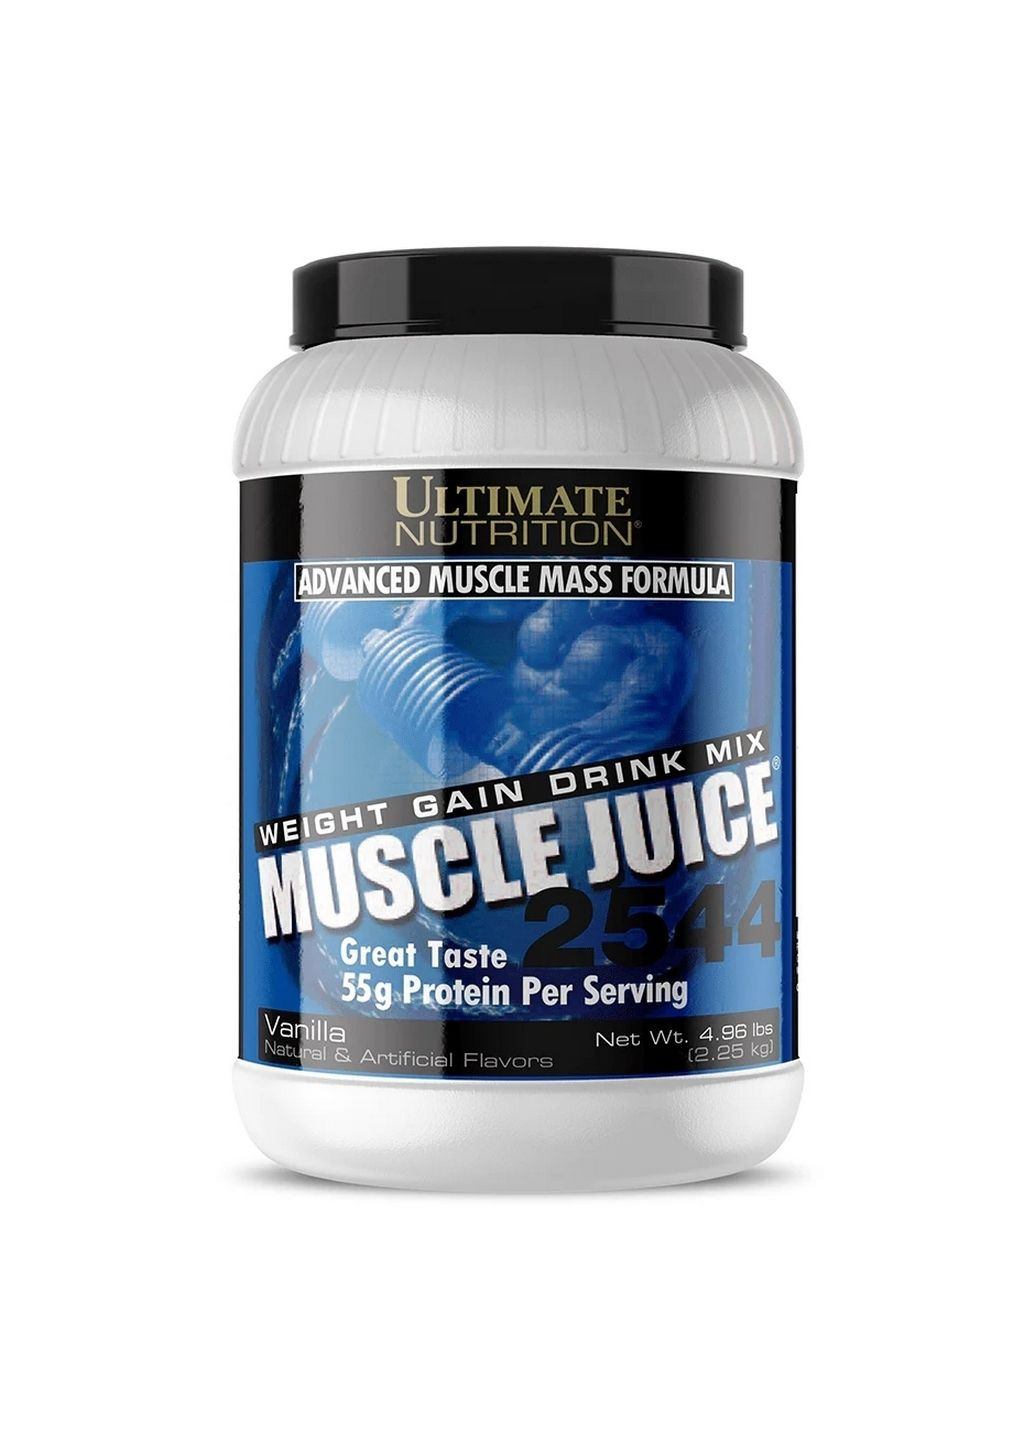 Гейнер Ultimate Muscle Juice 2544, 2.25 кг Ваниль Ultimate Nutrition (293420801)